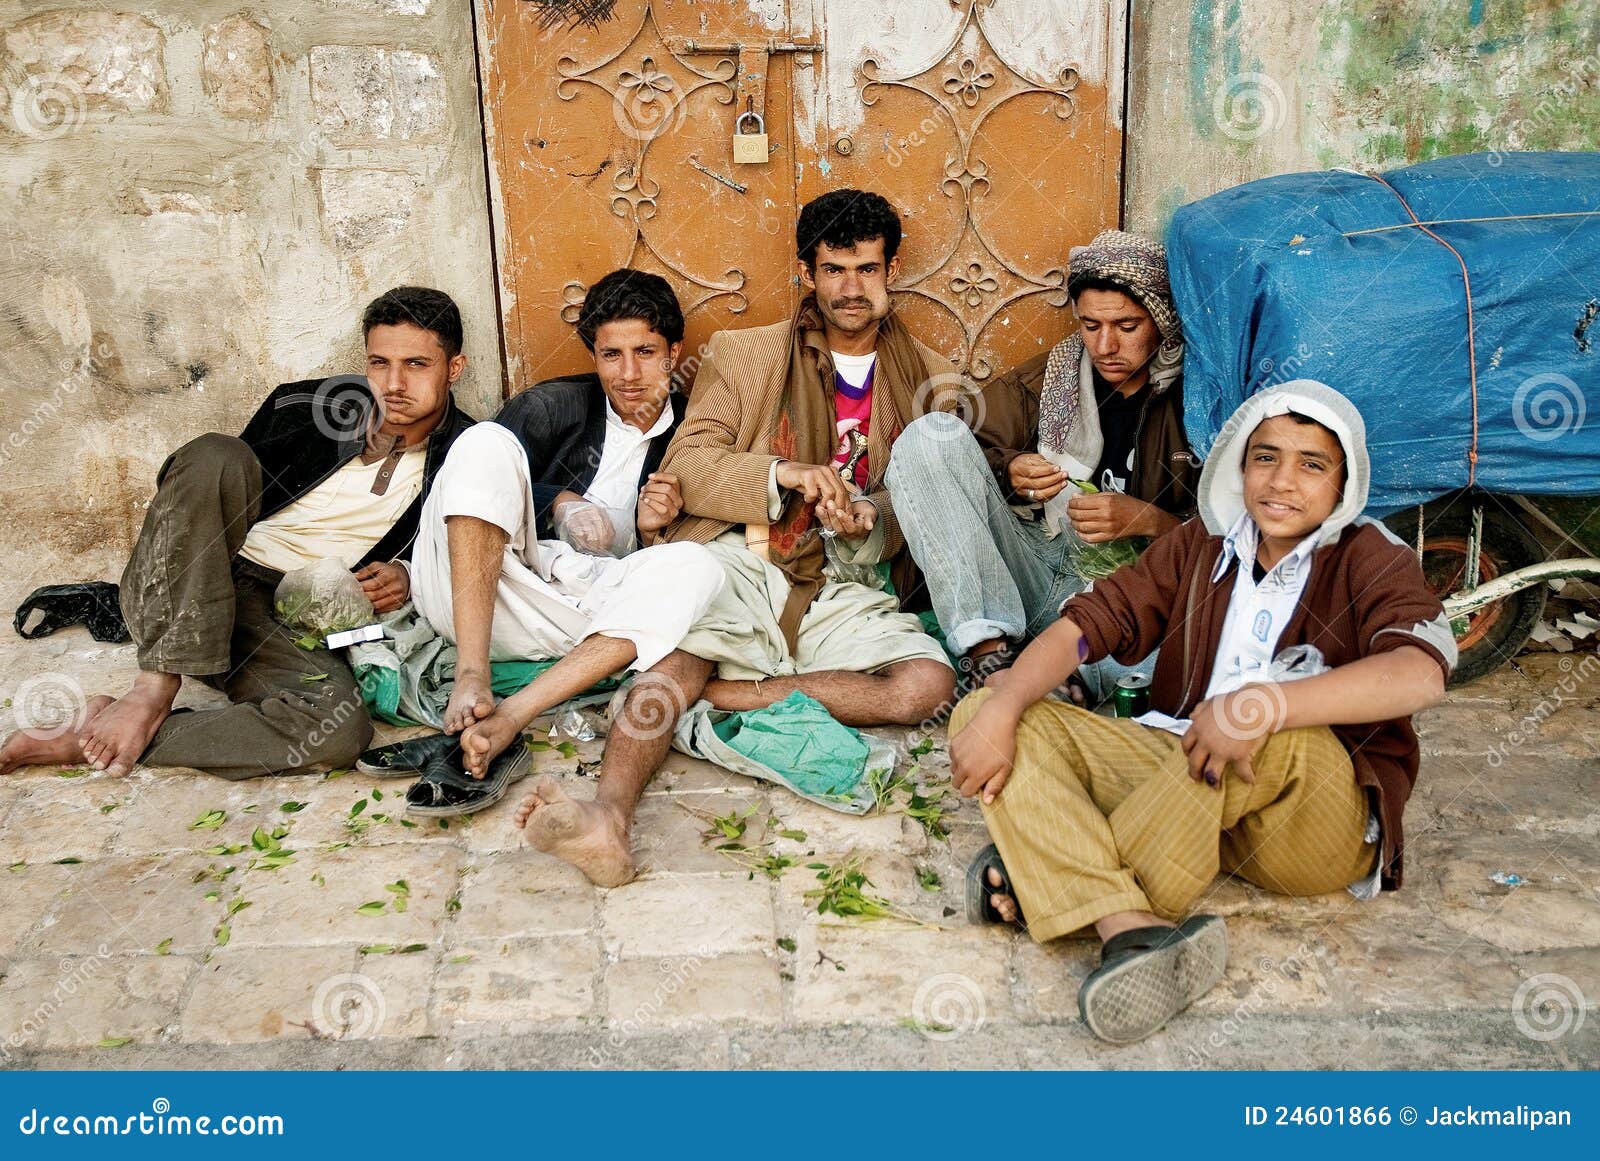 hombres-jovenes-que-mastican-el-khat-en-sanaa-yemen-24601866.jpg